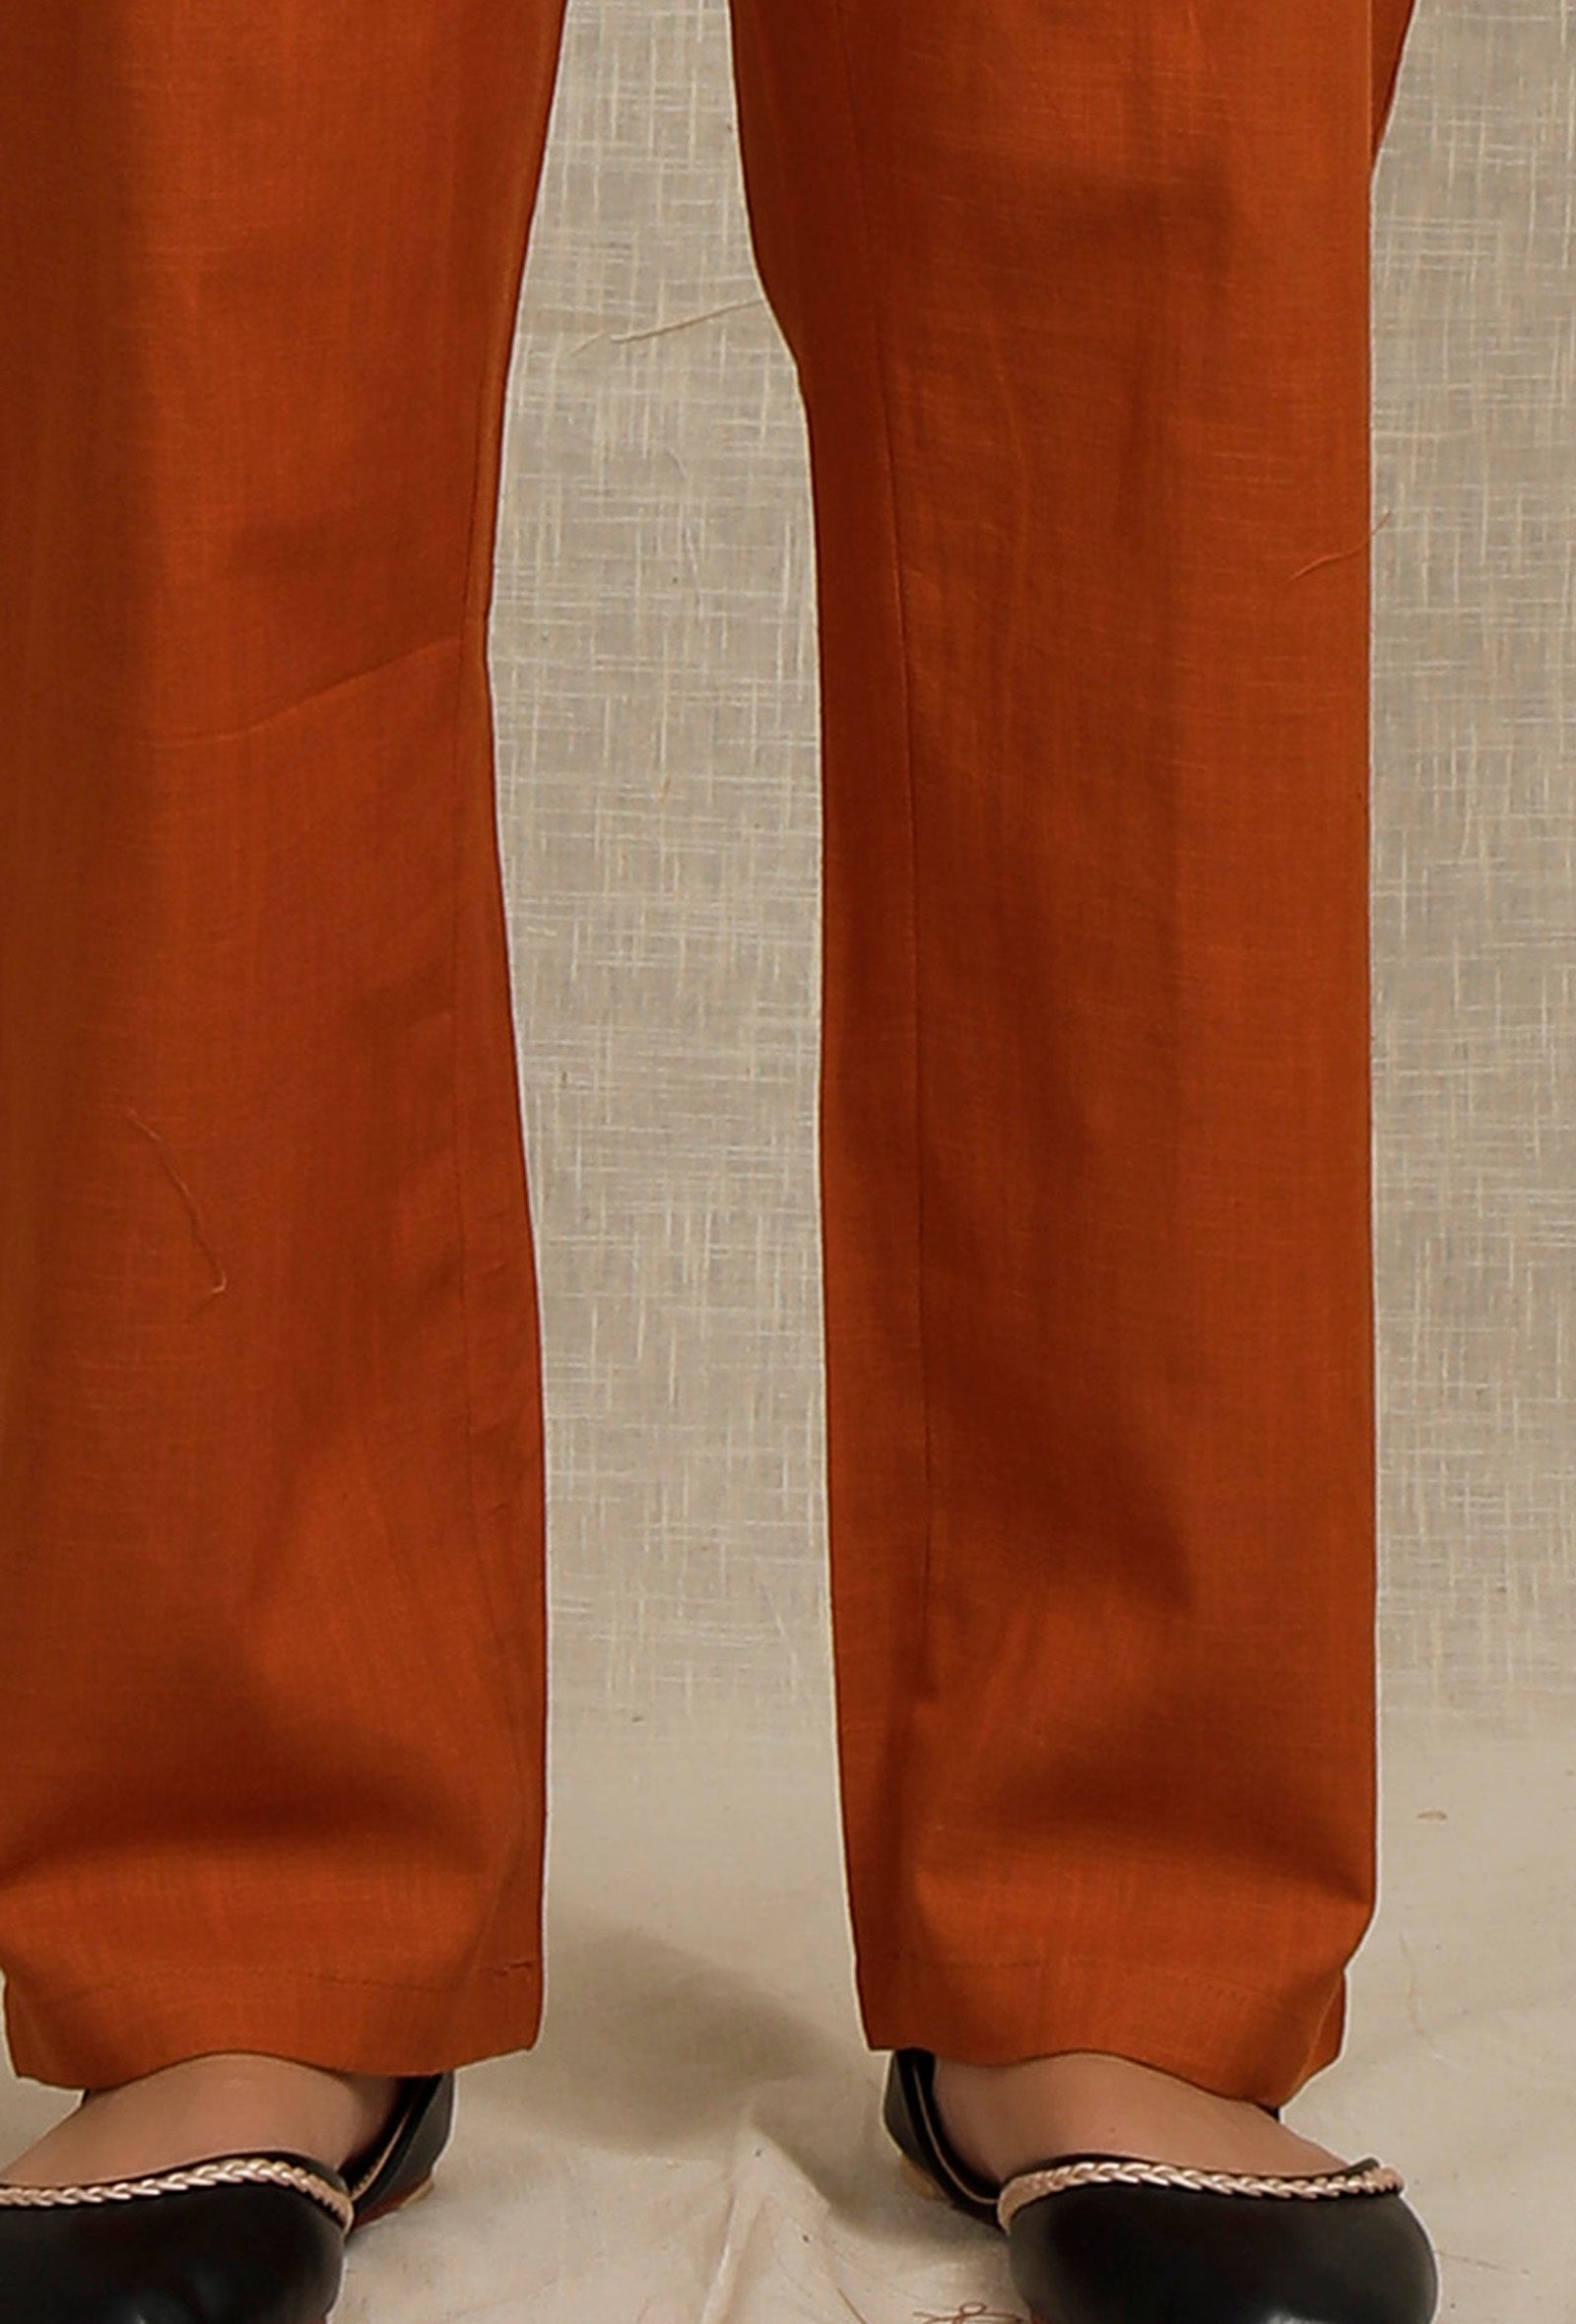 Solid Orange Rust Narrow Fit Pants